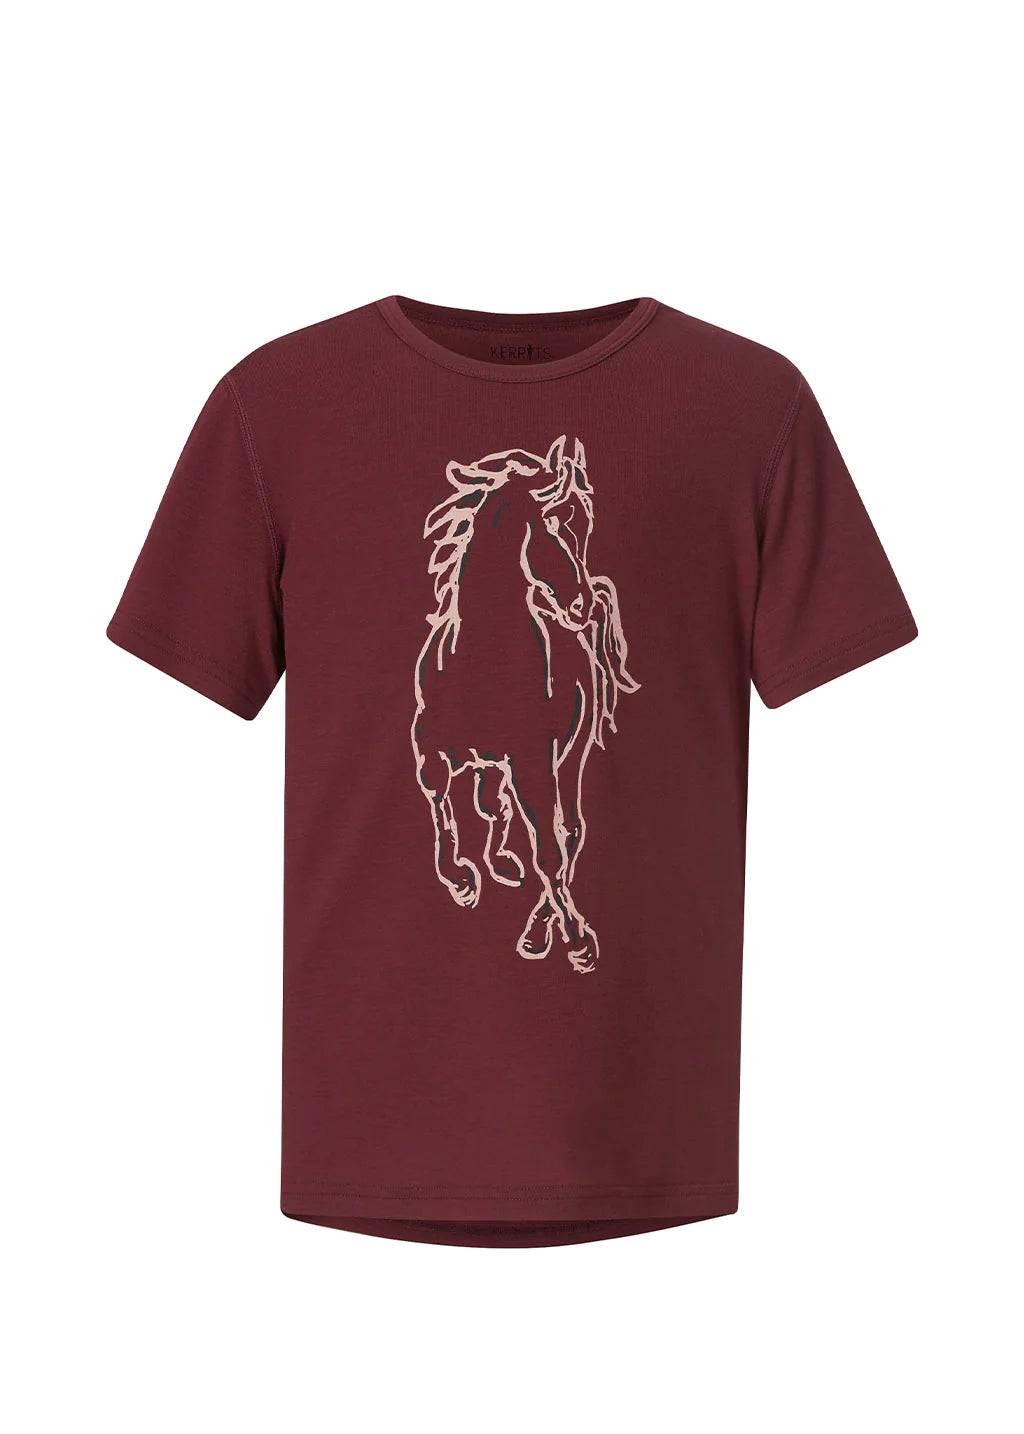 Kerrits Kids Dancing Horses Tee Shirt